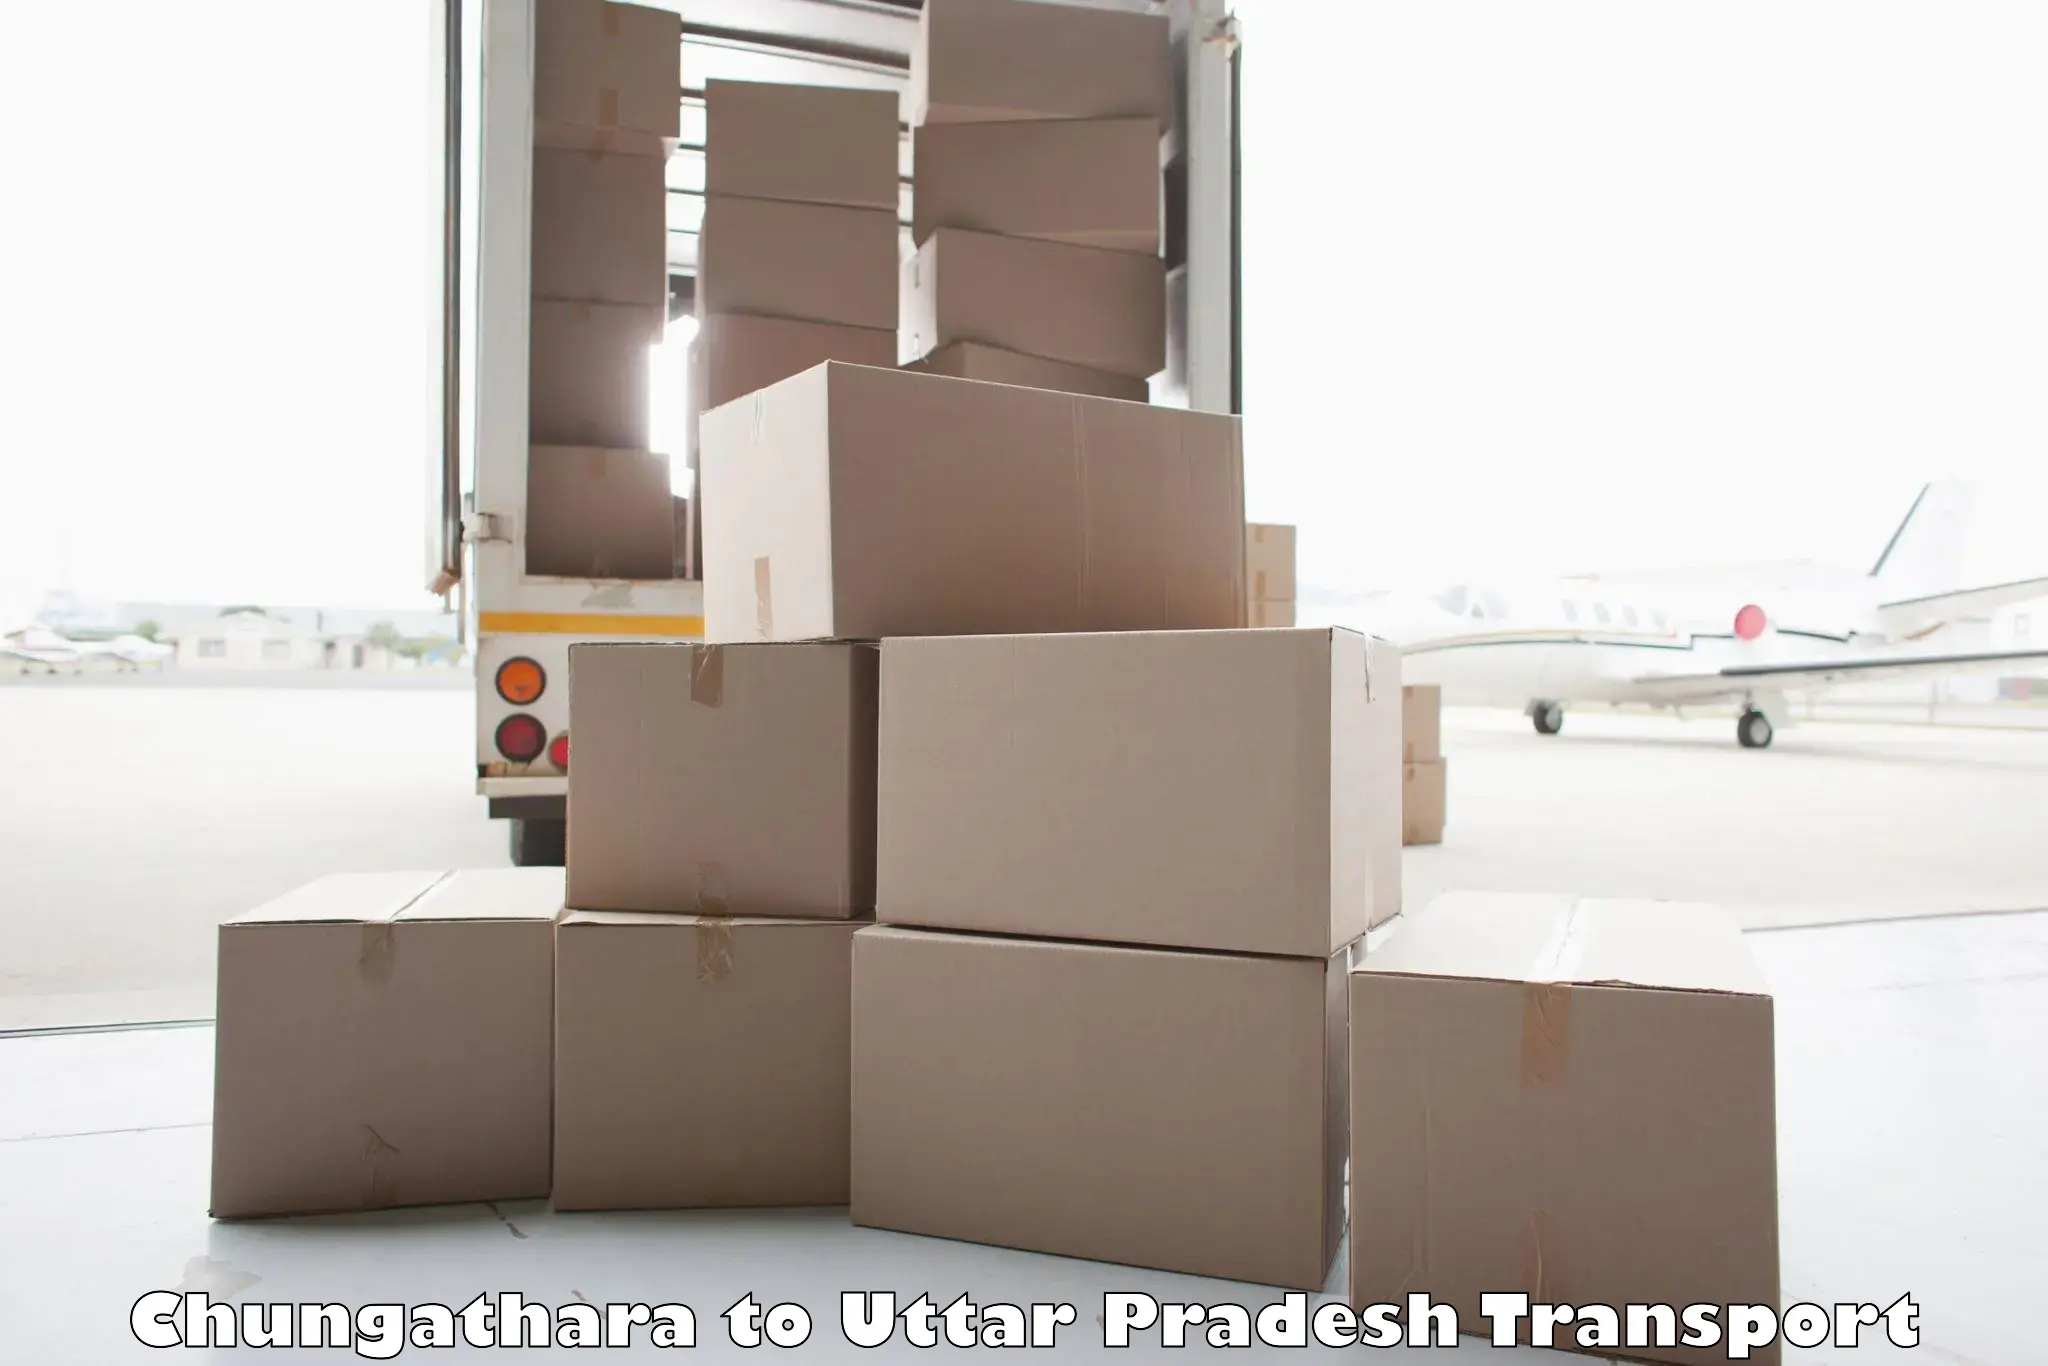 Logistics transportation services Chungathara to Khadda